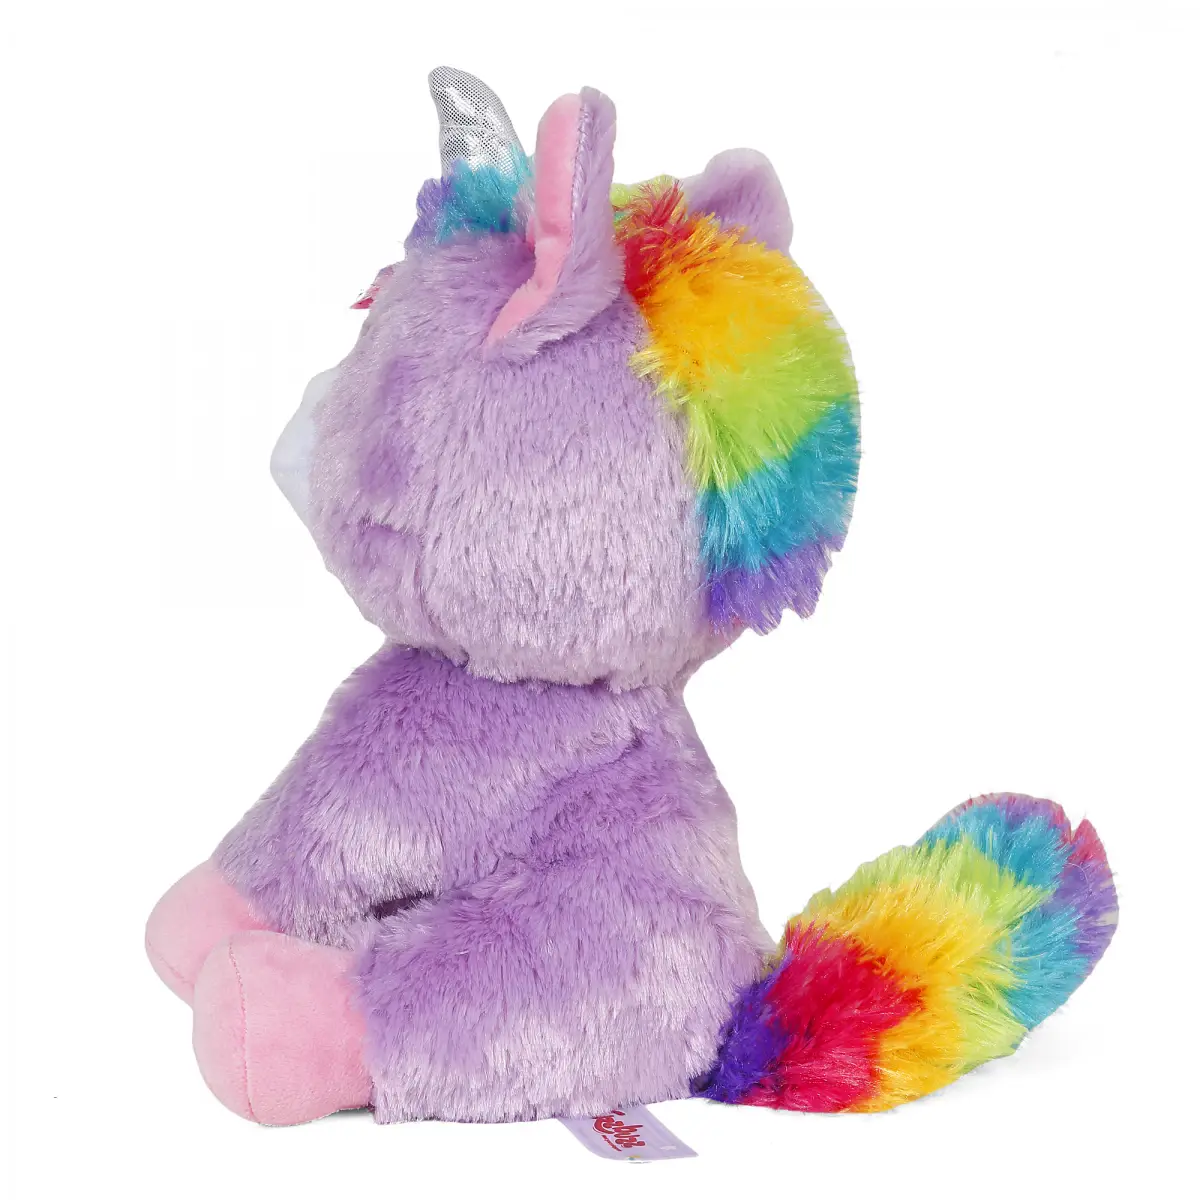 Fuzzbuzz Unicorn Beaniboos Soft Toys for Kids, 18M+, Purple